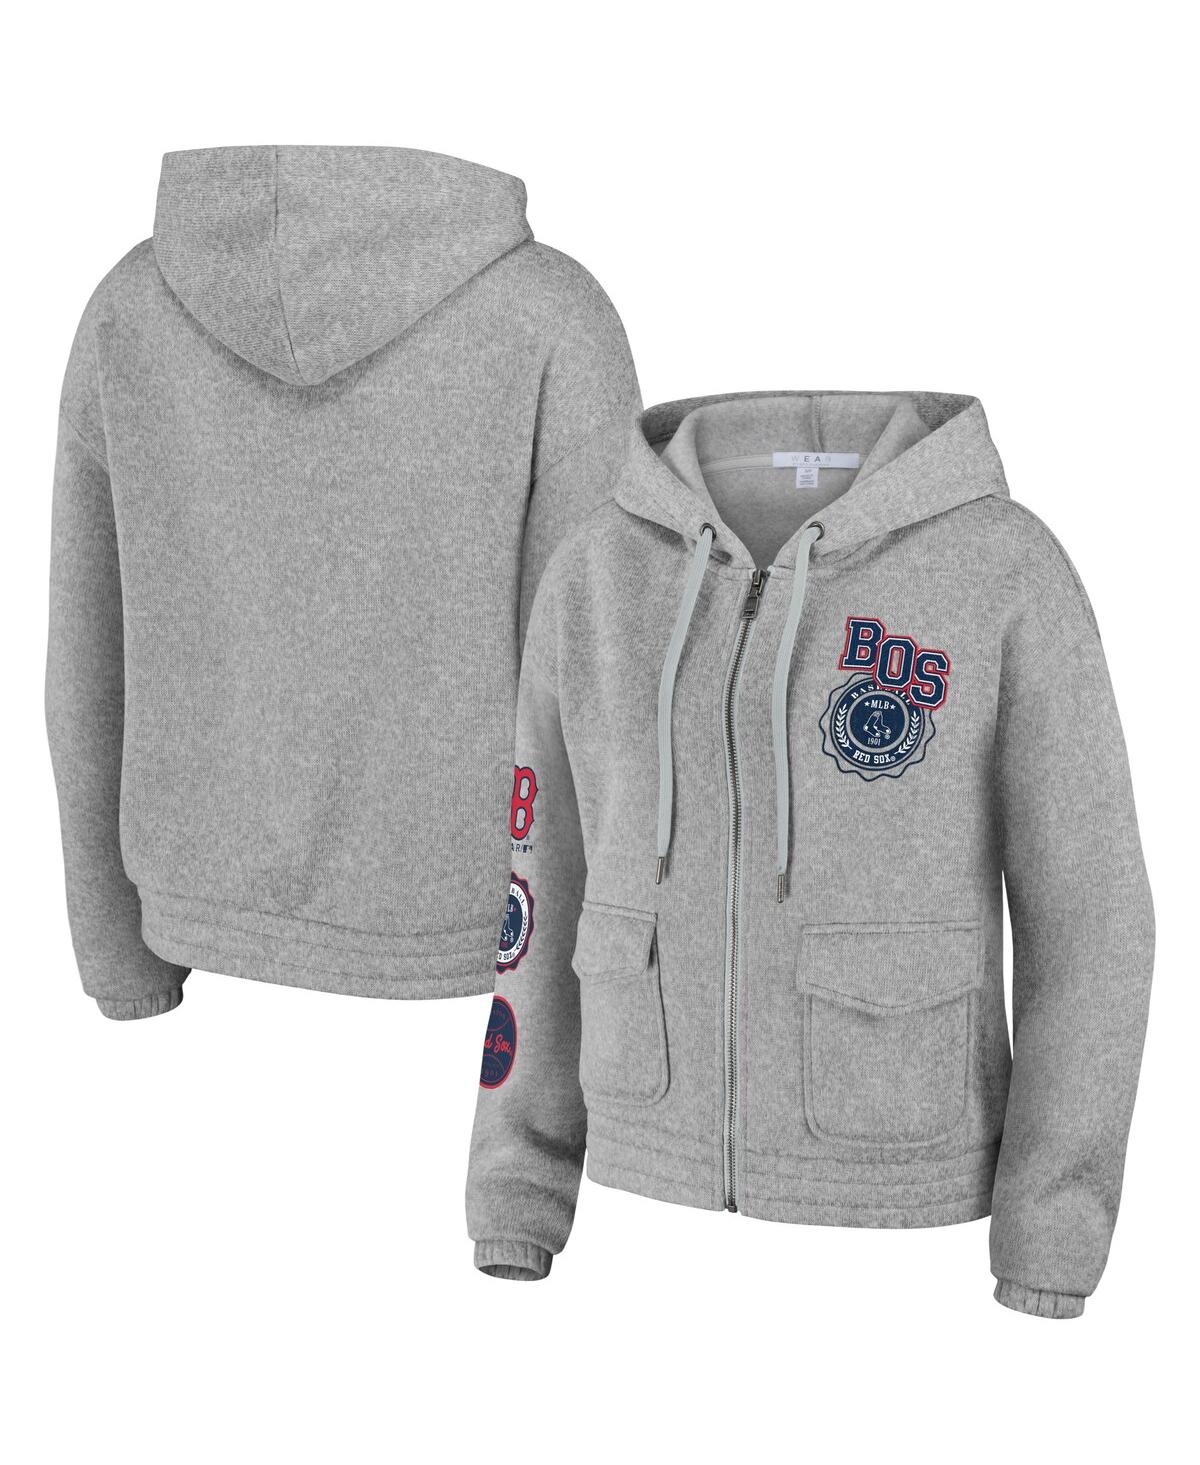 Shop Wear By Erin Andrews Women's  Gray Boston Red Sox Full-zip Hoodie